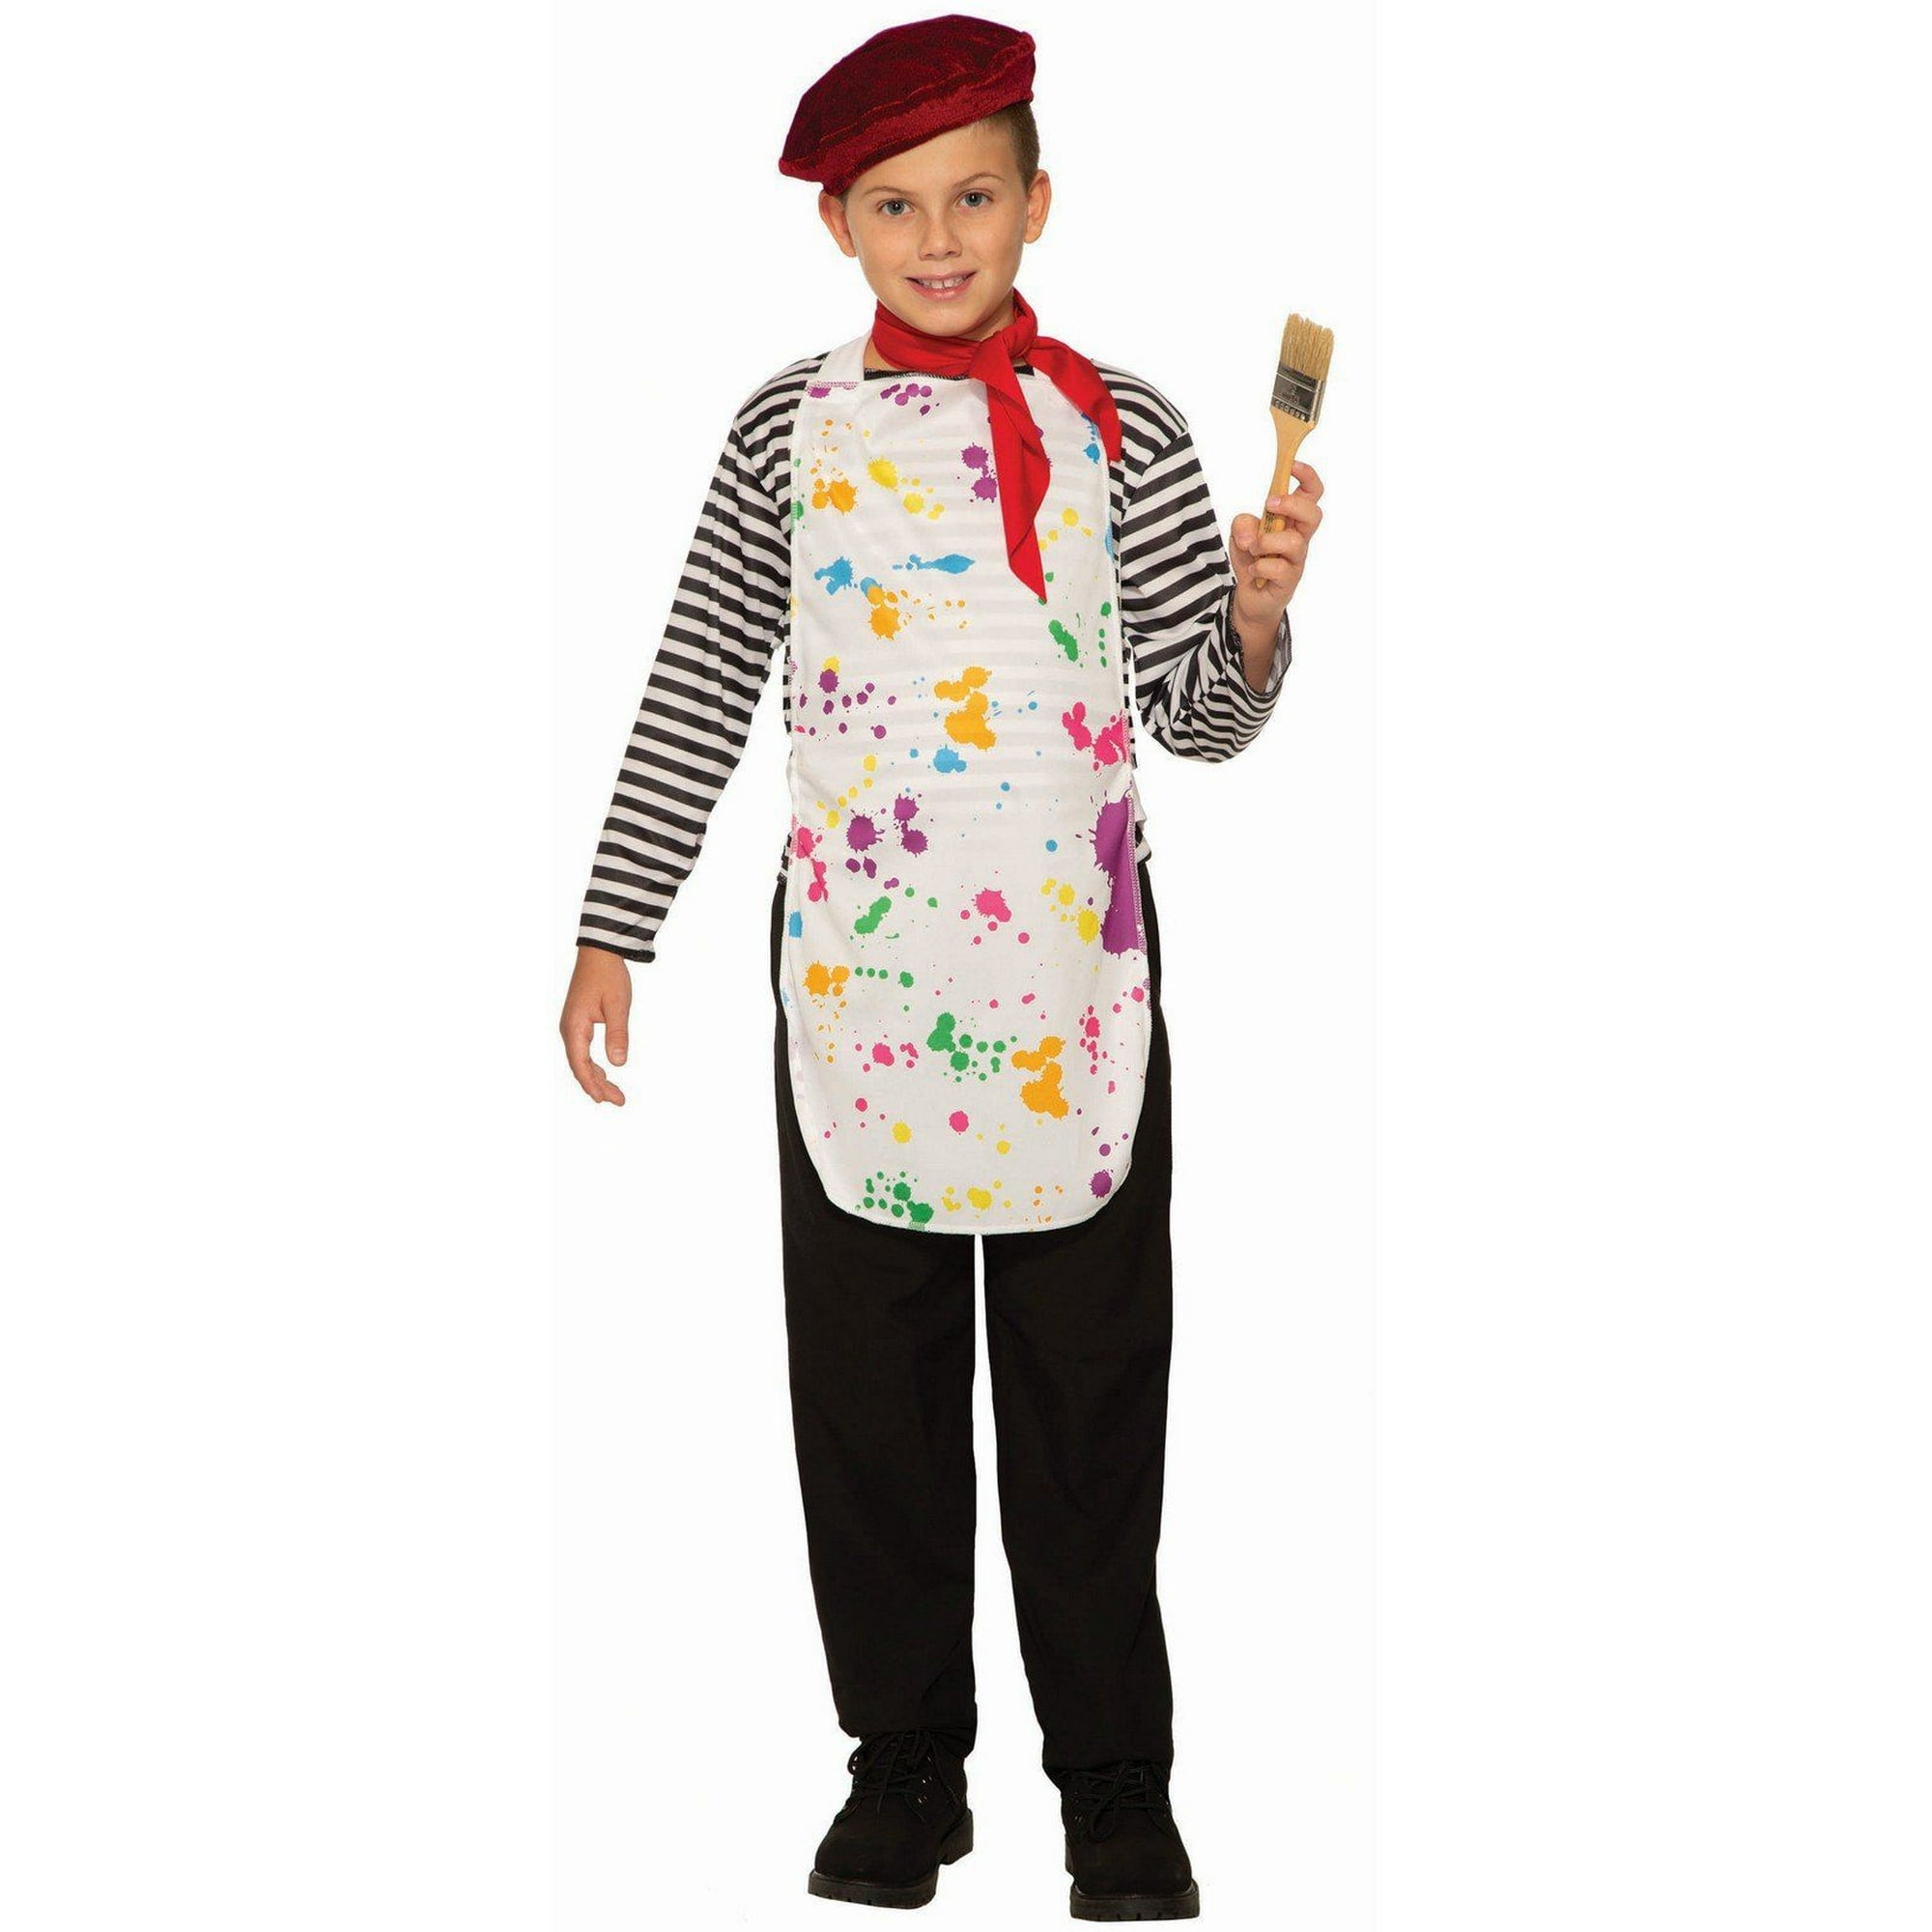 Predictor sjælden Sæbe Child Artist Costume - Walmart.com